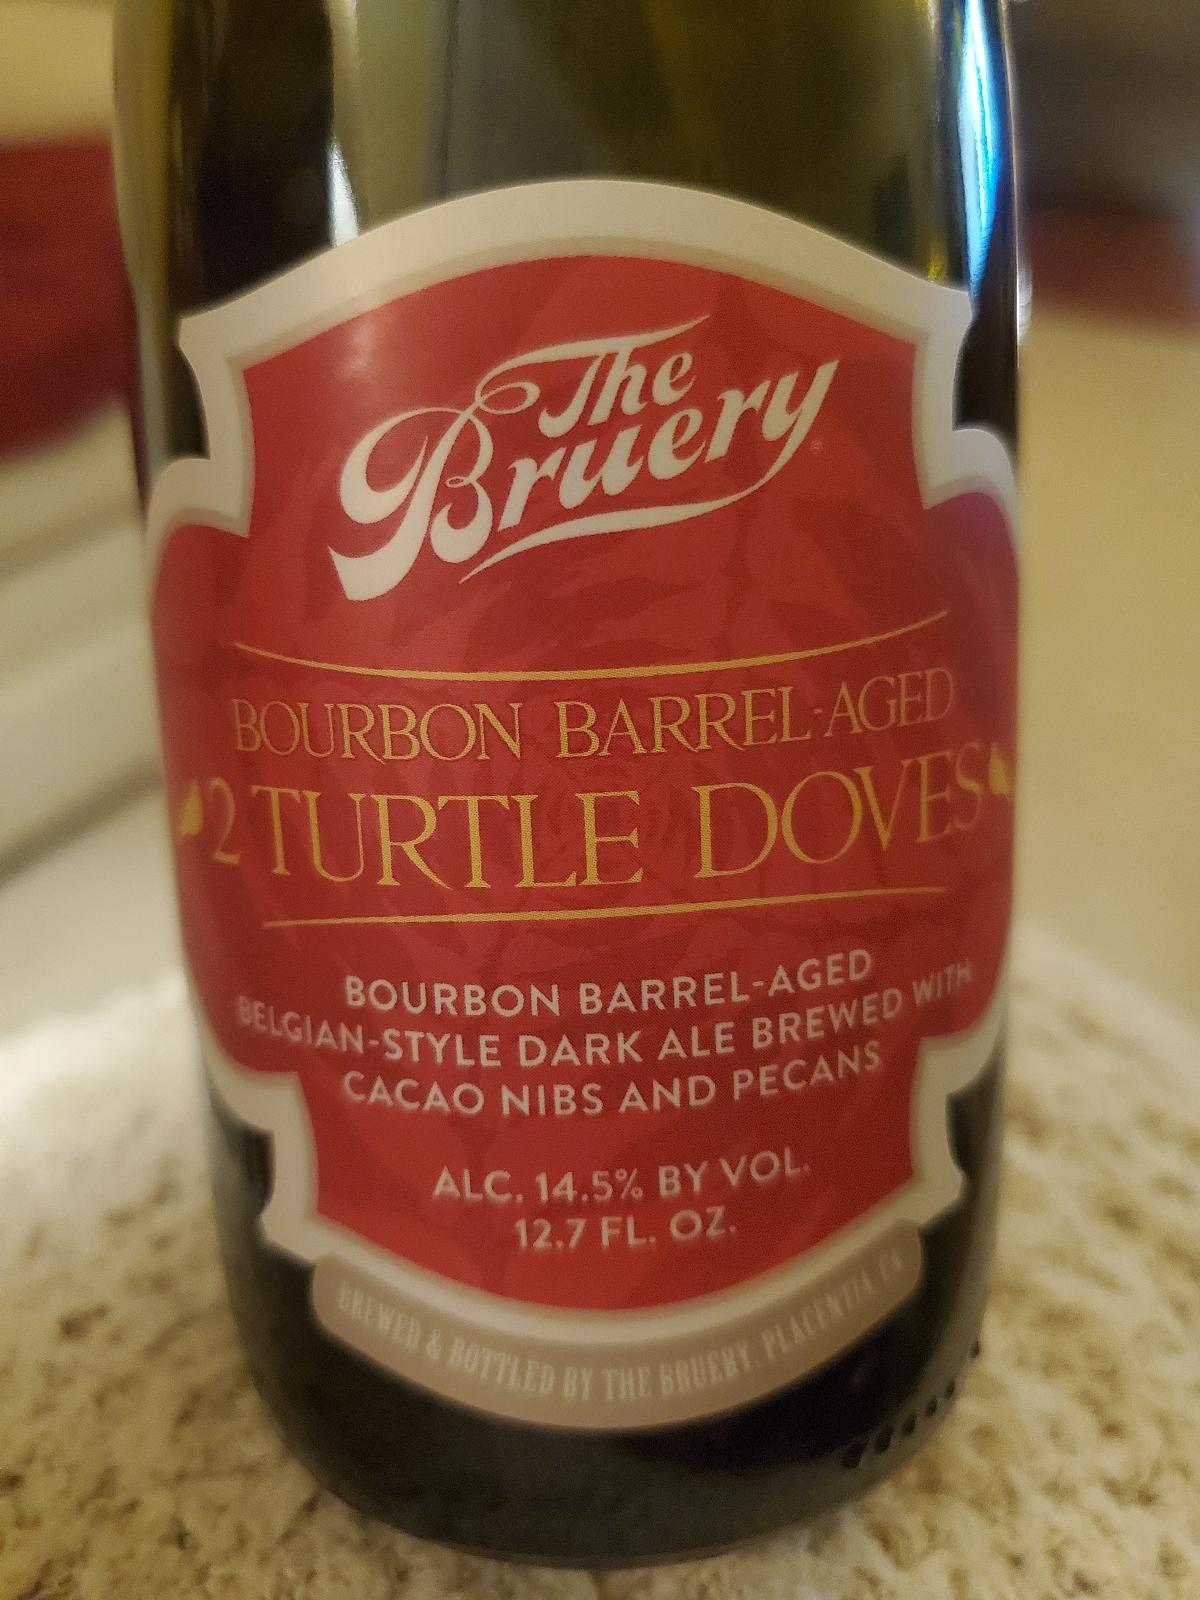 2 Turtle Doves (Bourbon Barrel Aged)